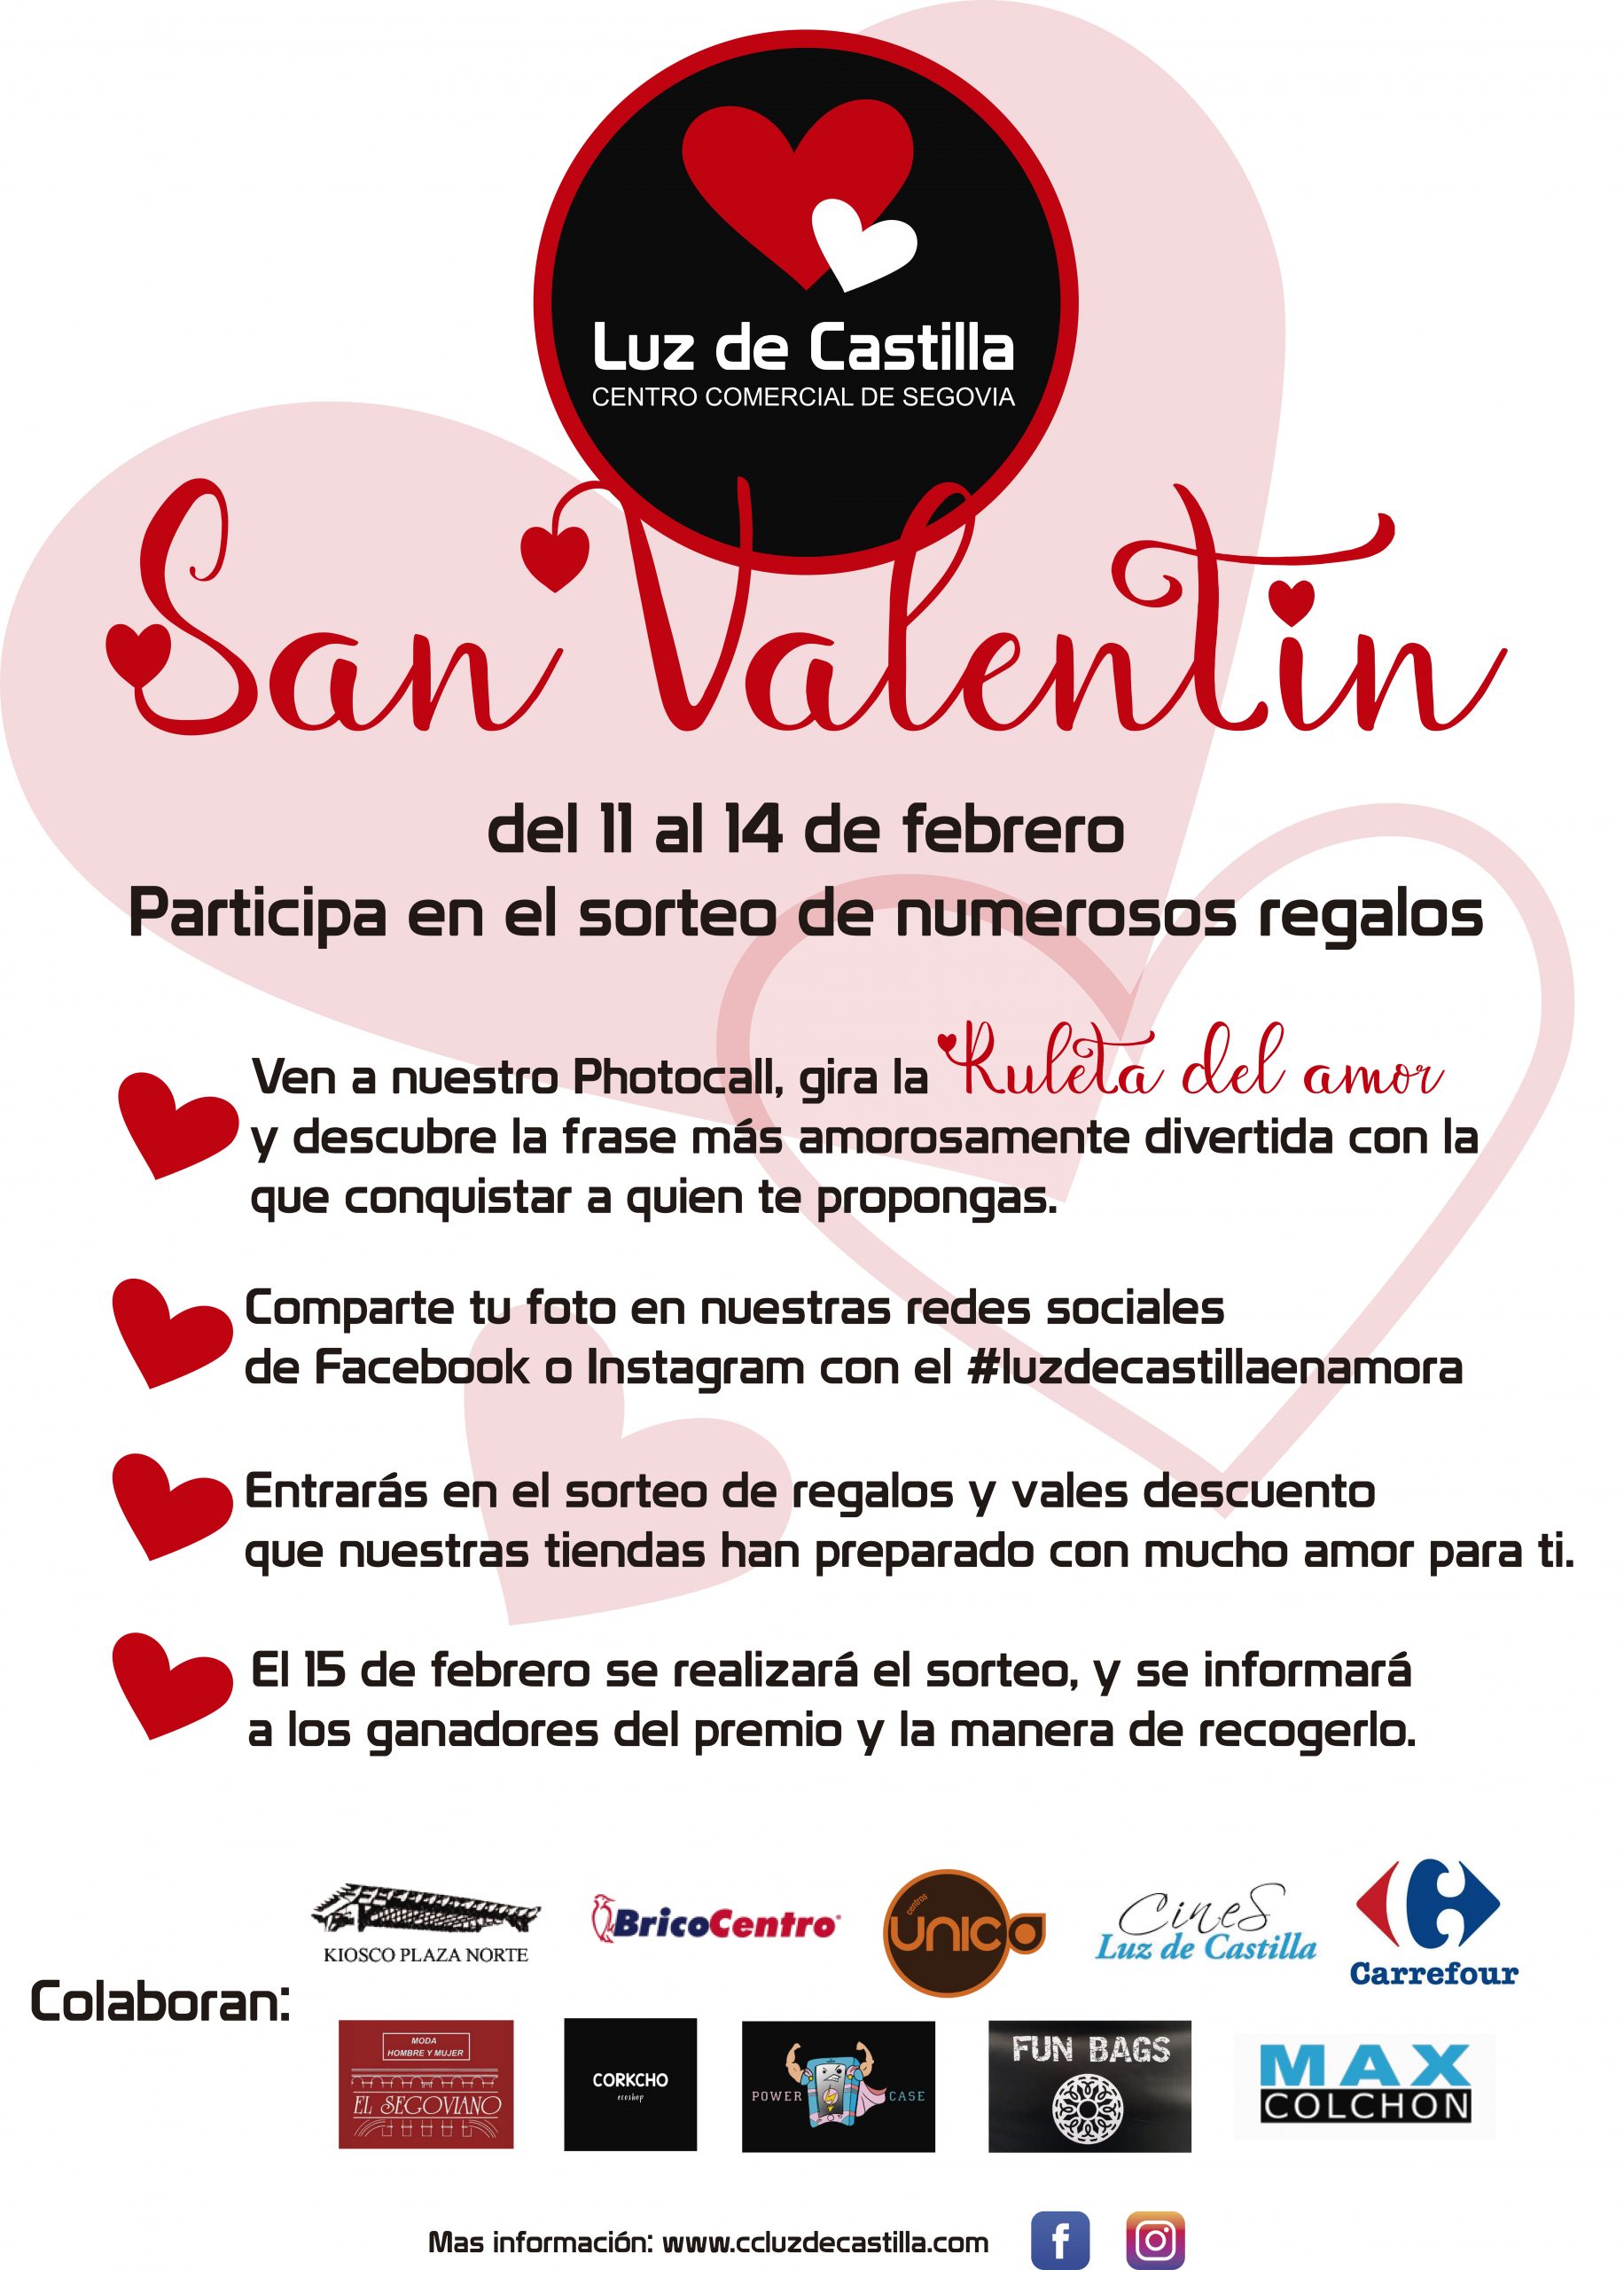 San Valentín en Luz de Castilla